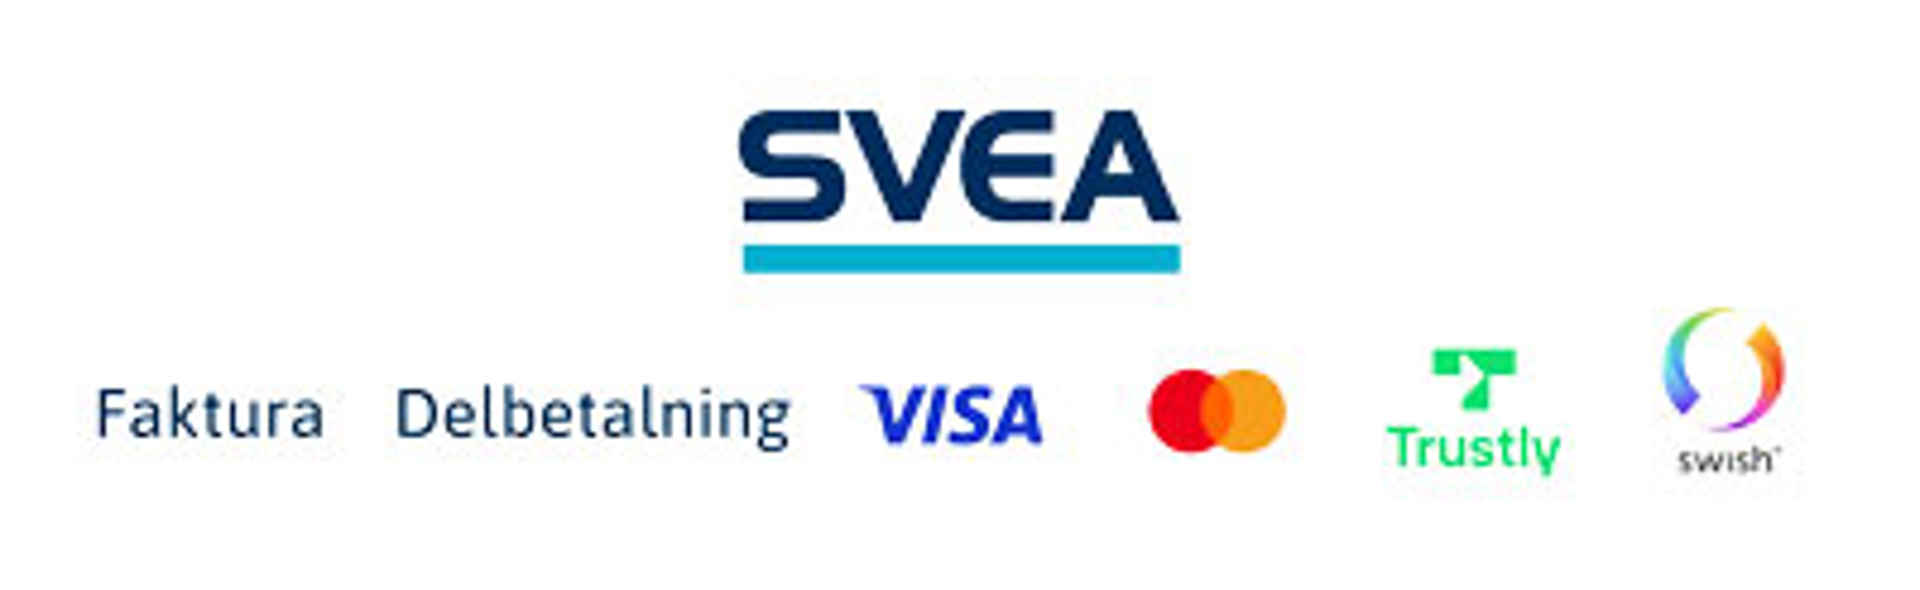 Svea Payment banner, Swe